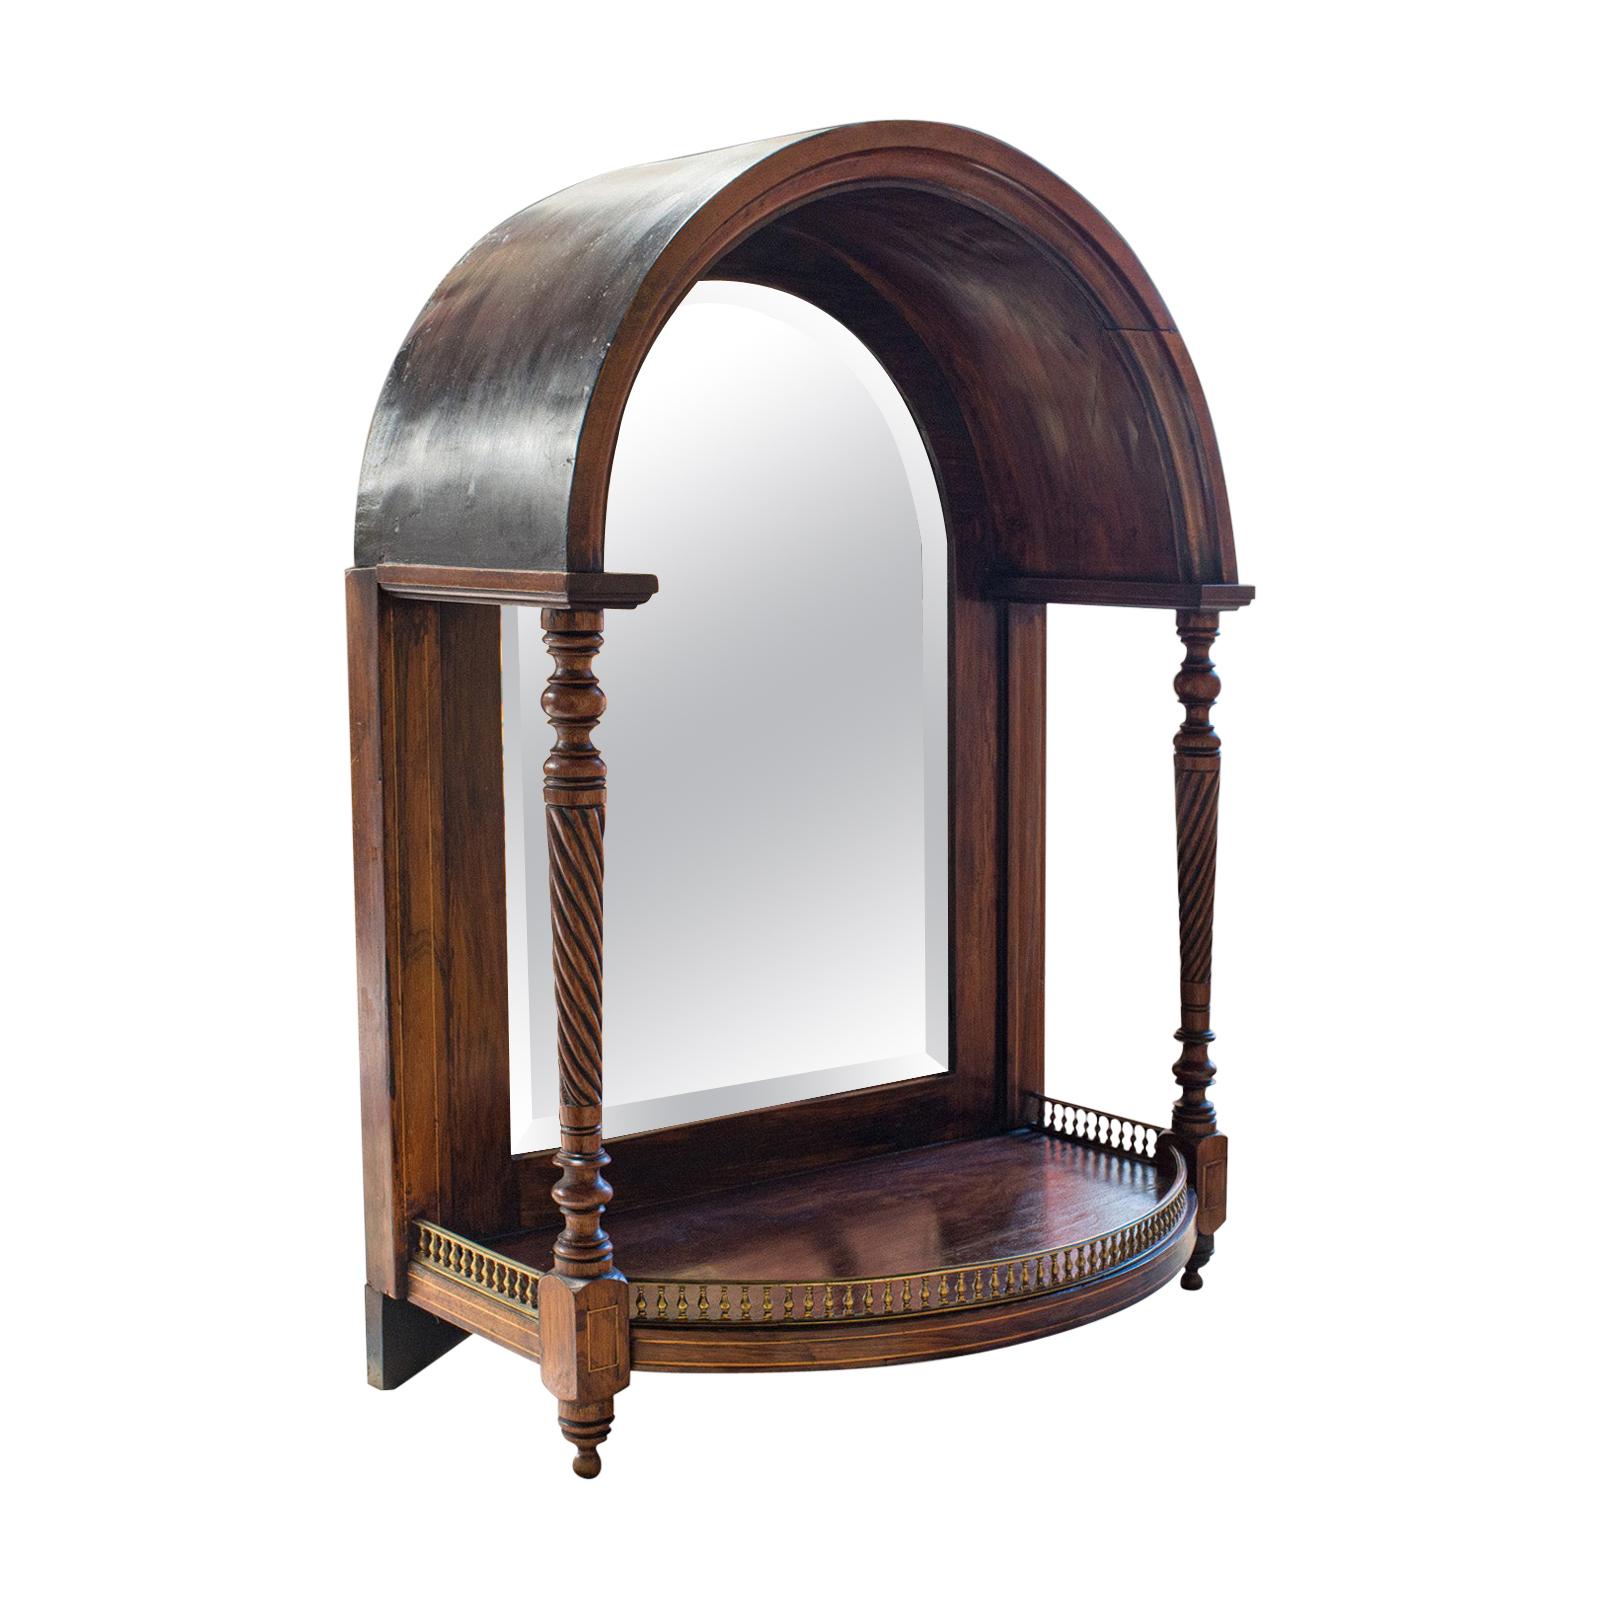 Antique Butler's Mirror, English, Rosewood, Dome Top, Wall, Victorian circa 1880